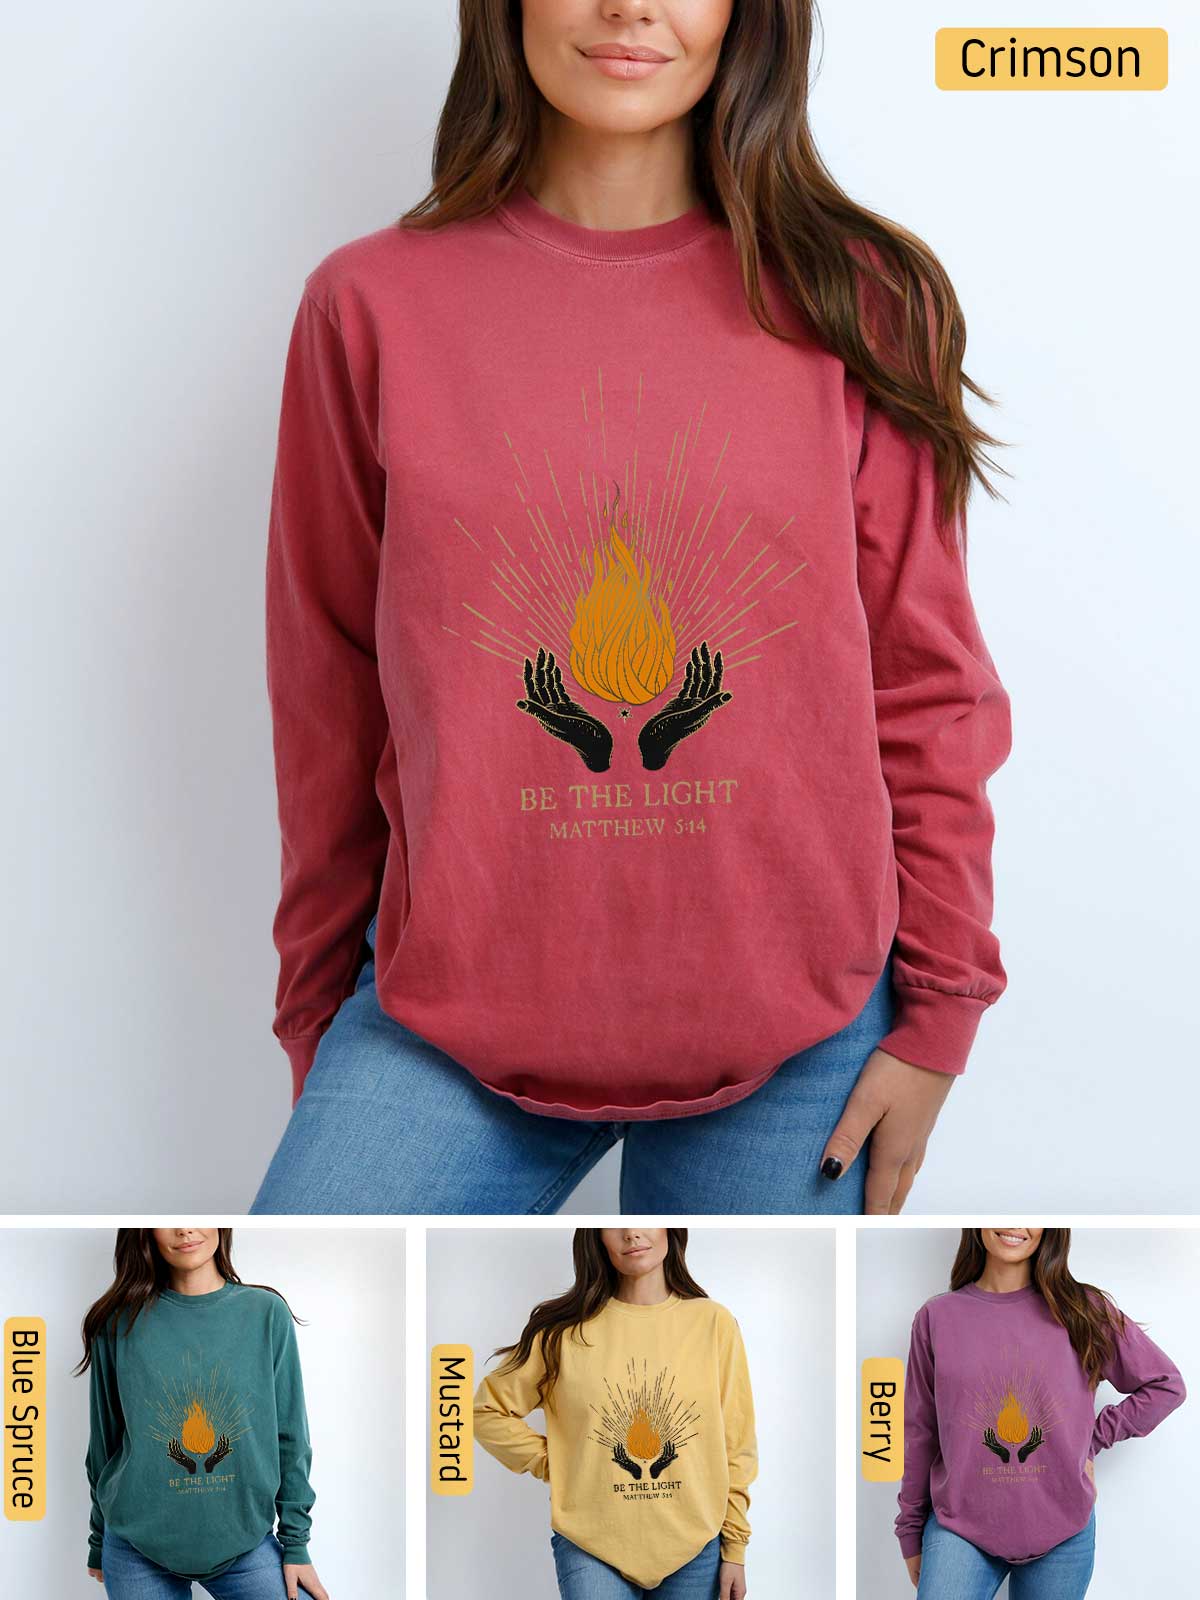 a woman wearing a sweatshirt with a fire on it